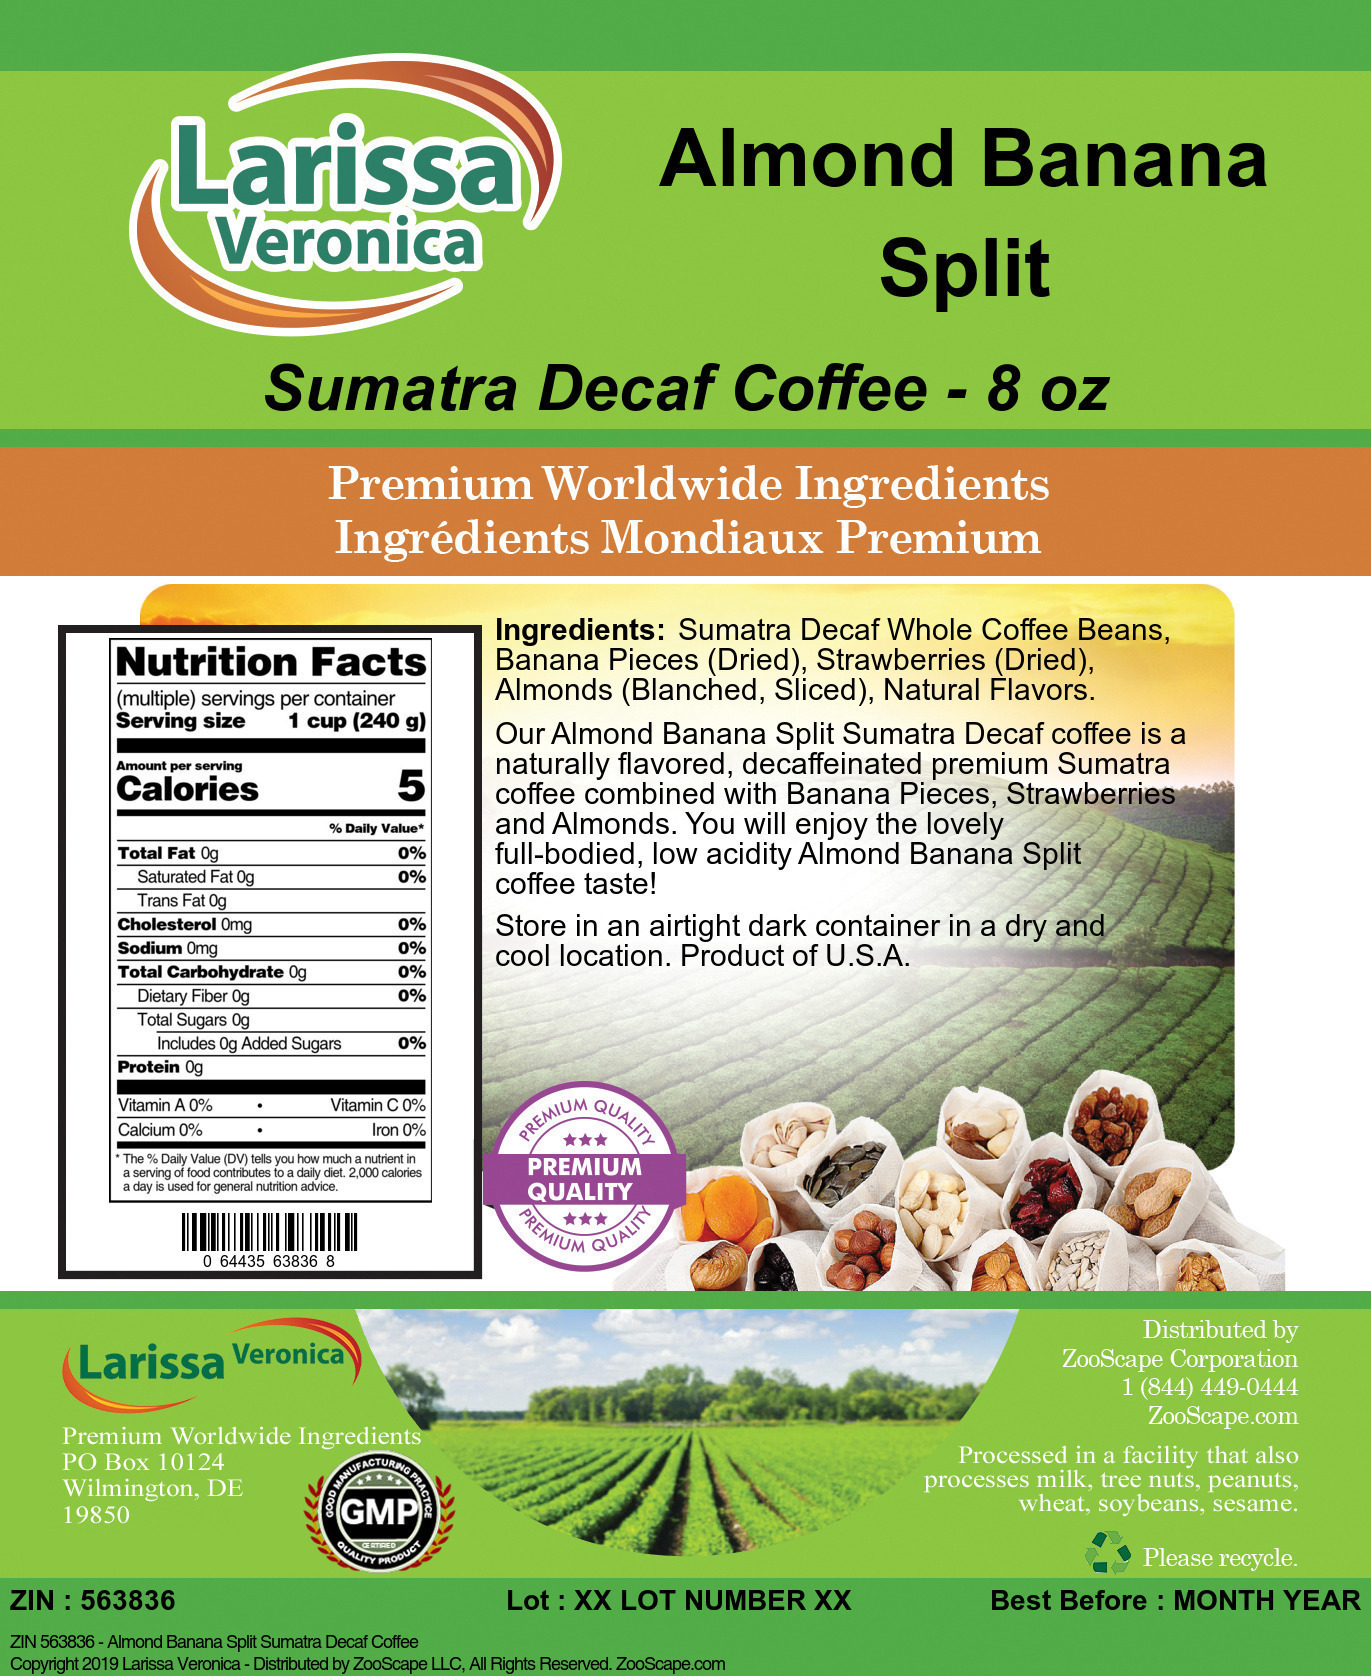 Almond Banana Split Sumatra Decaf Coffee - Label